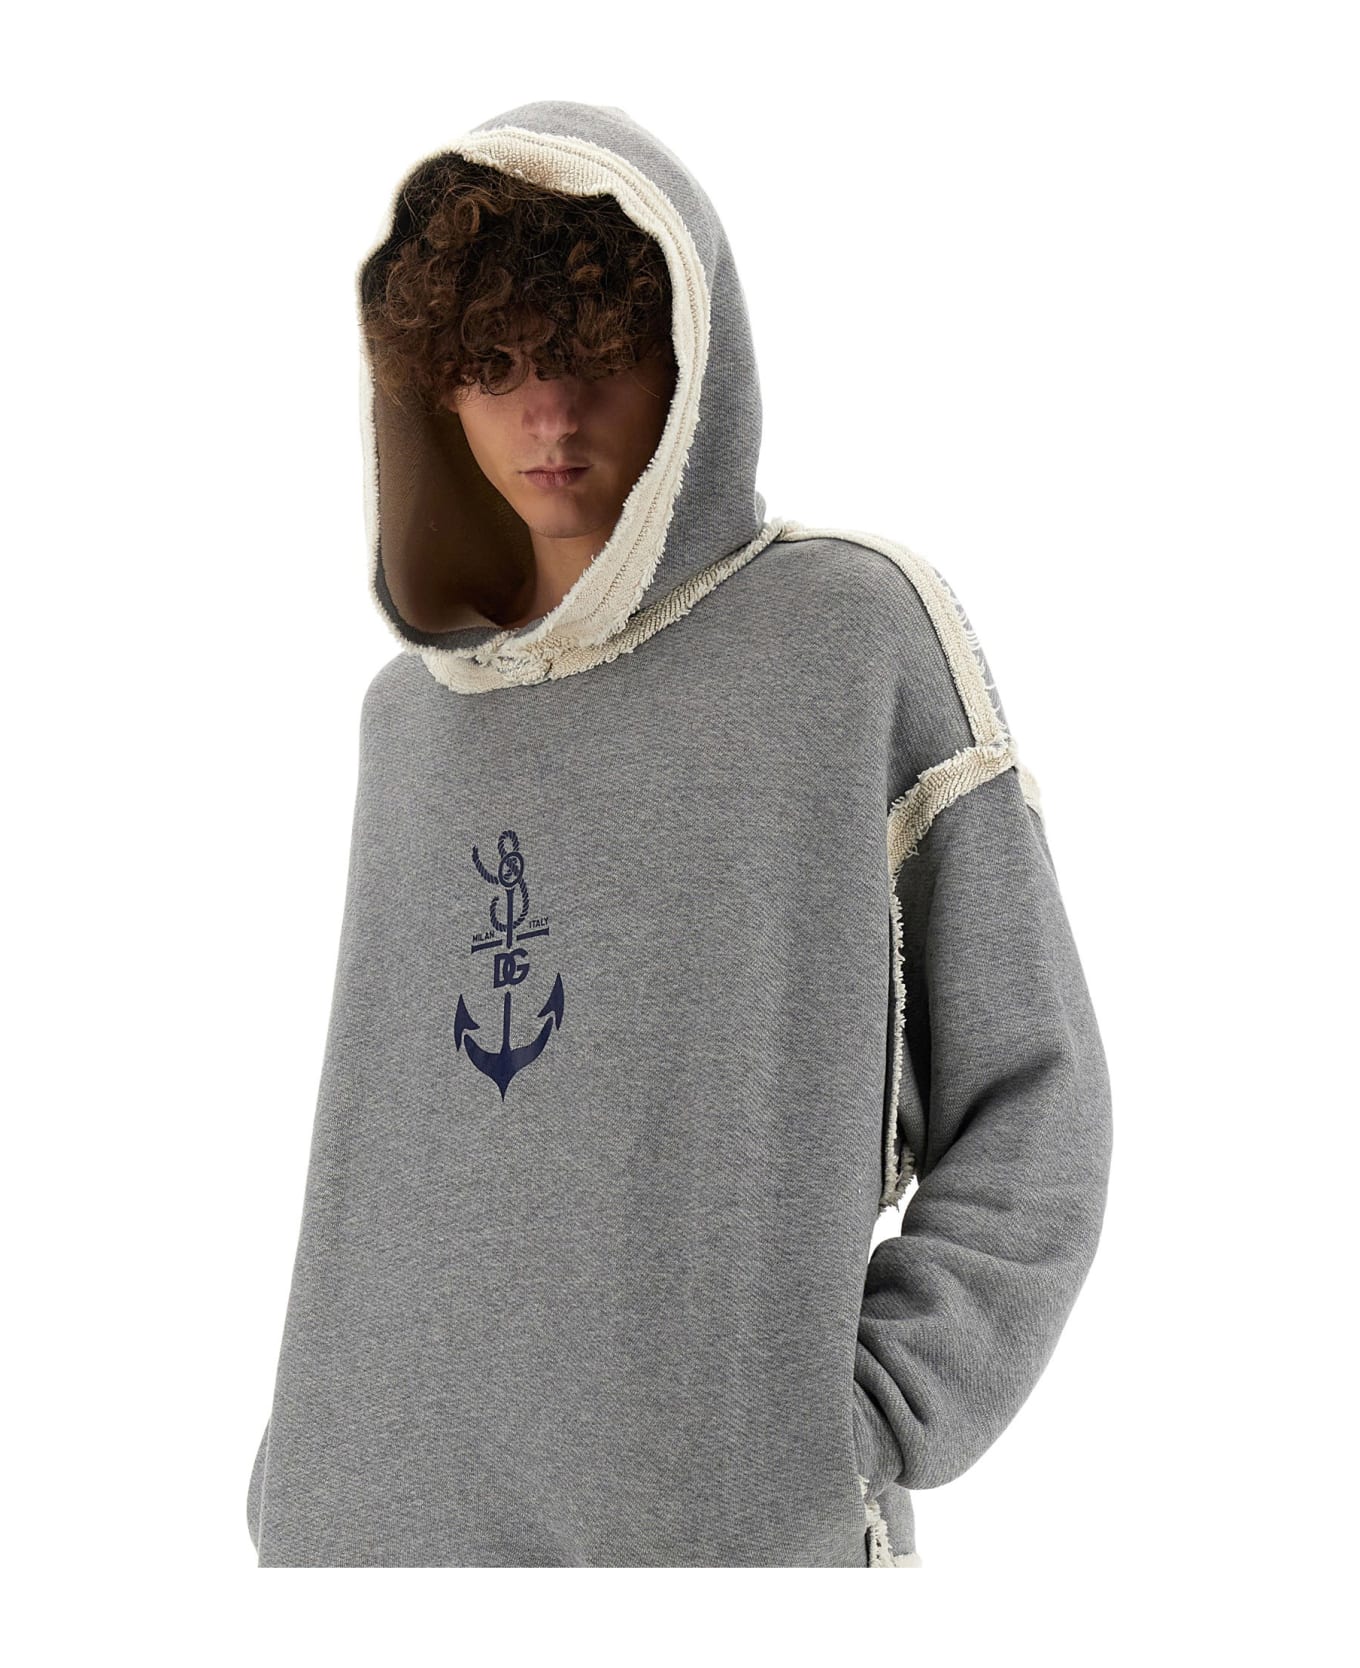 Dolce & Gabbana Sweatshirt With Navy Print - Grey